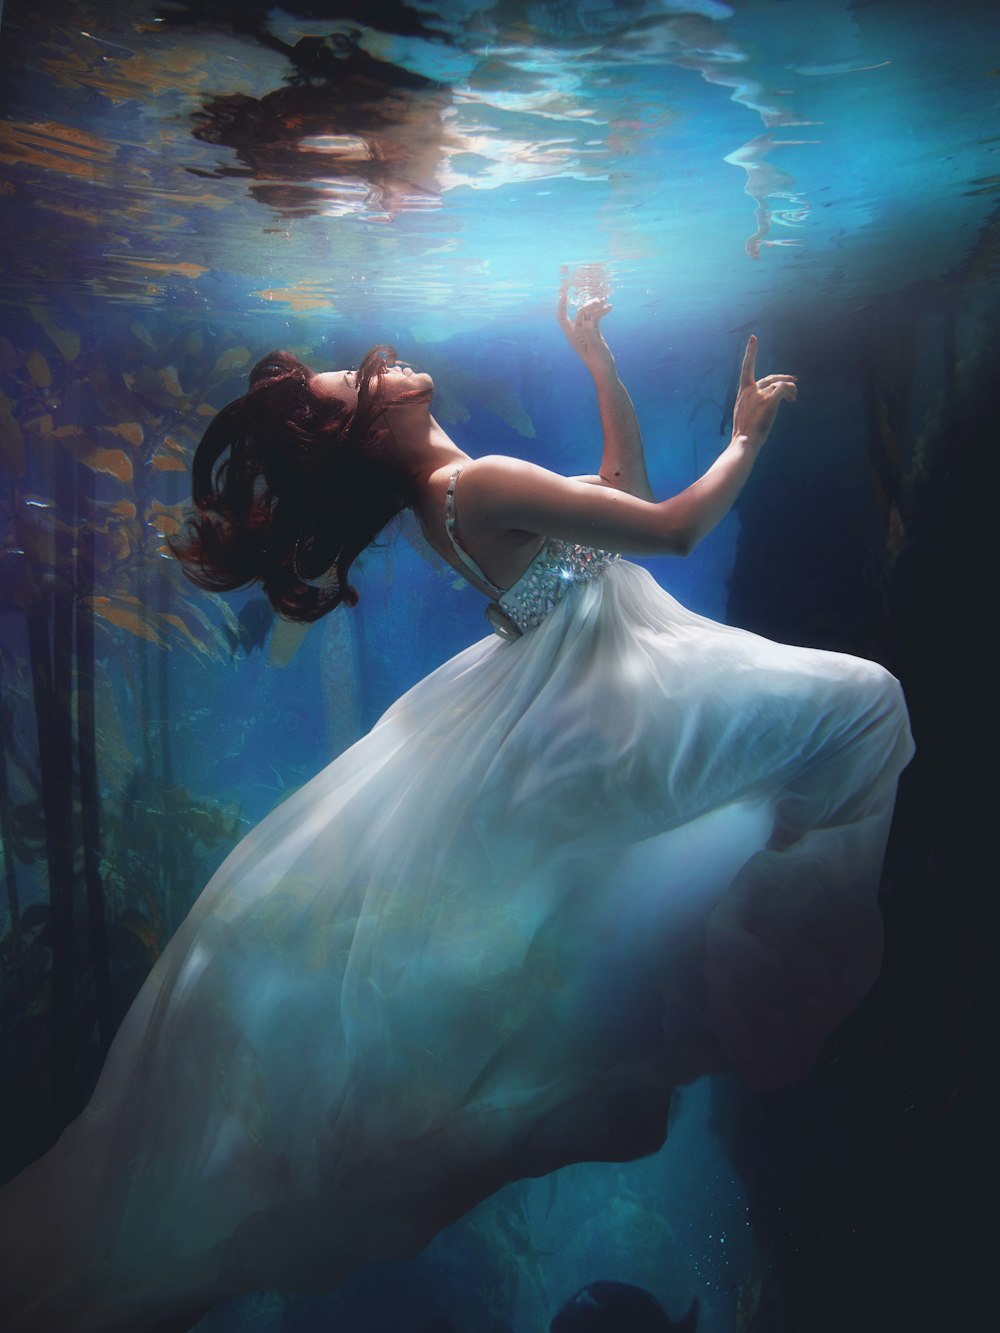 Underwater Photography Of Woman Wearing White Dress Photo Free Underwater Image On Unsplash